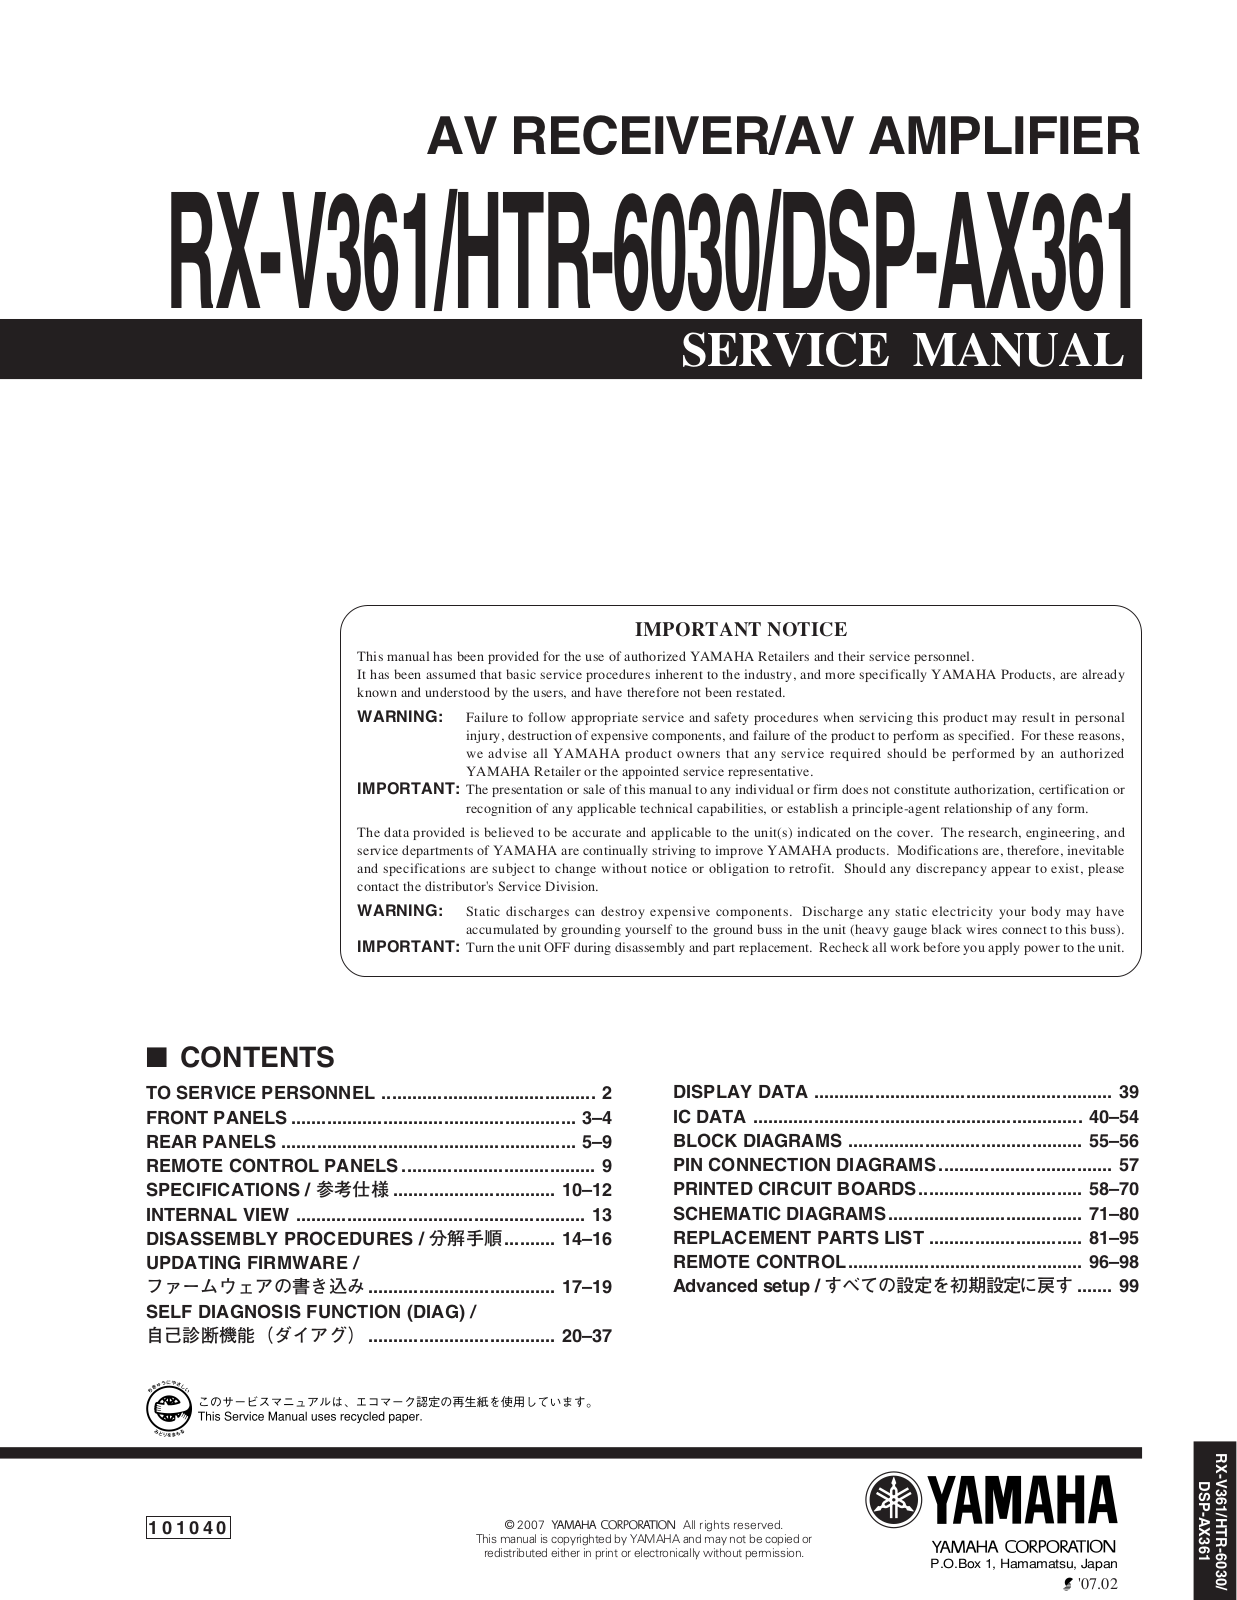 Yamaha DSPAX-361 Service manual